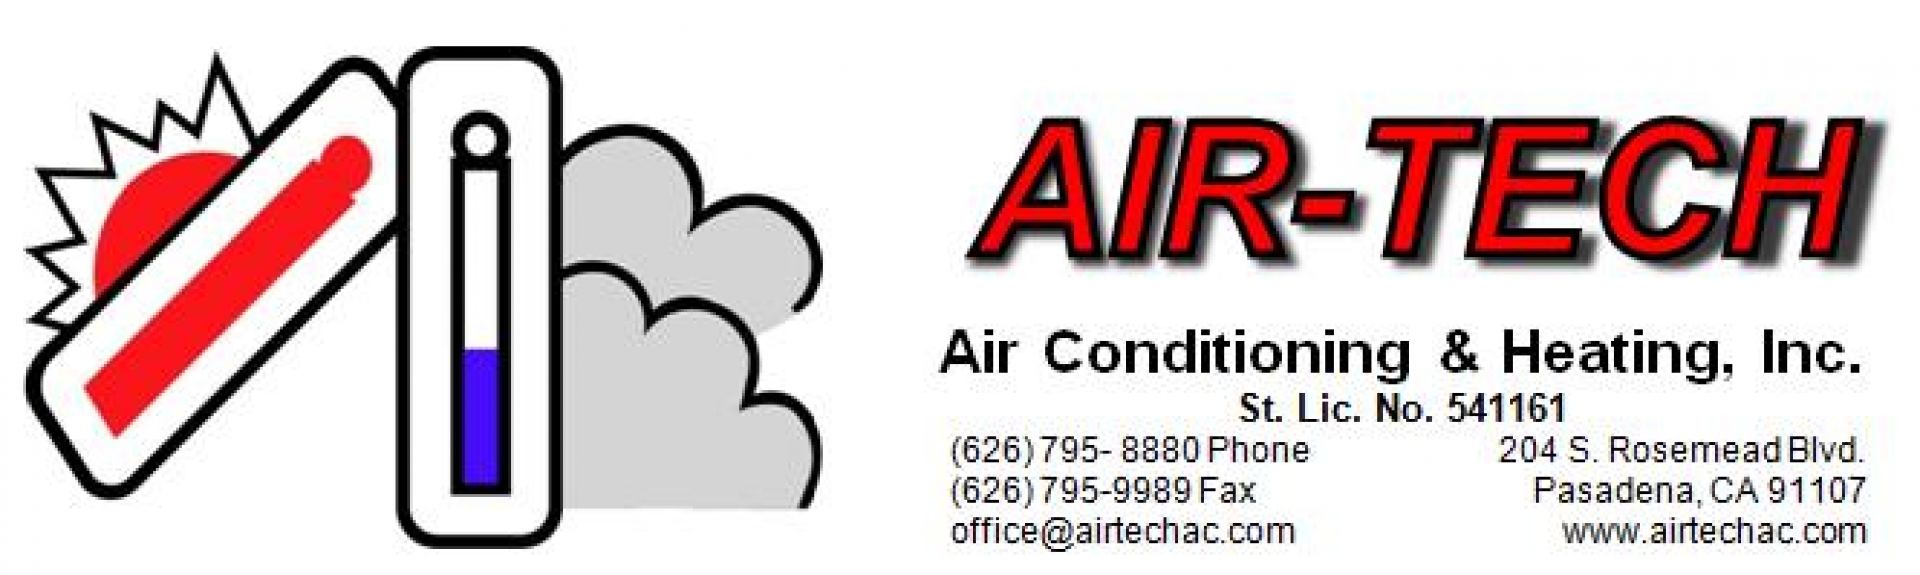 Air-Tech Air Conditioning & Heating, Inc. company logo